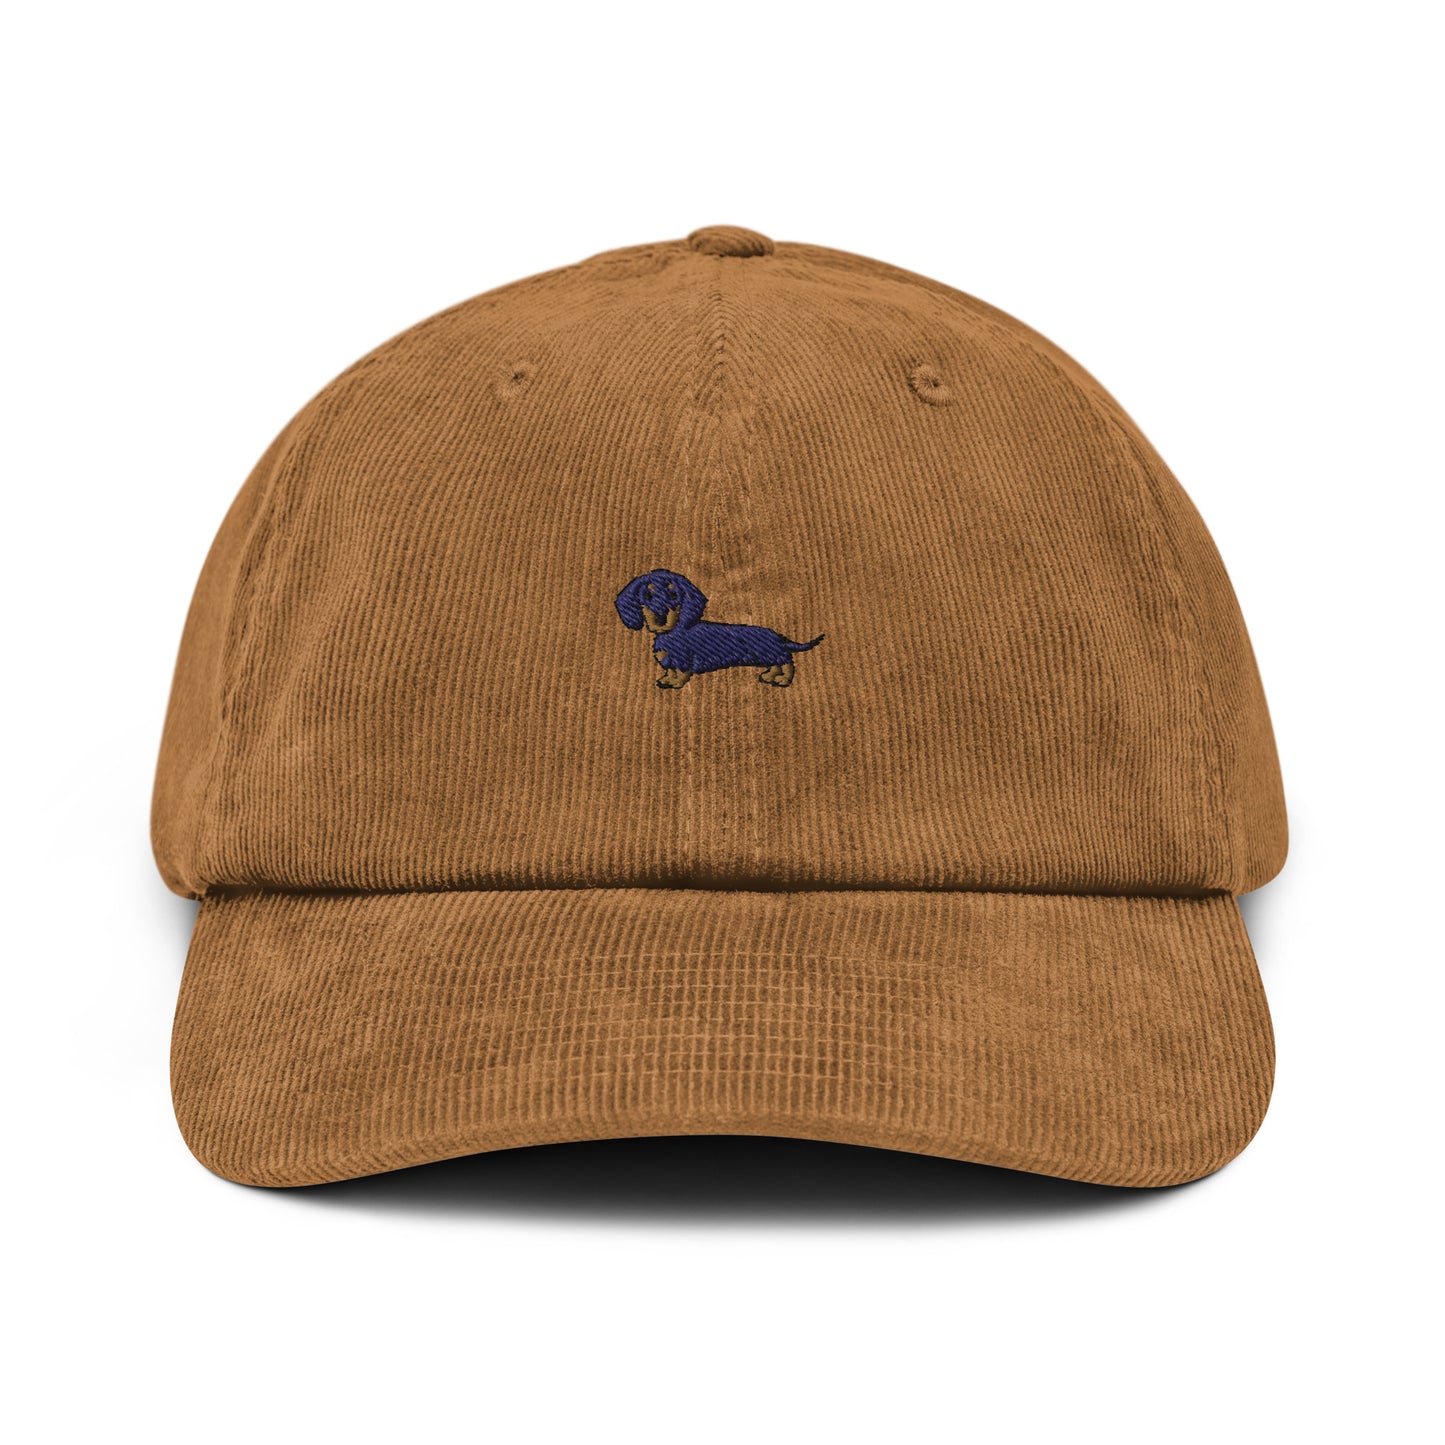 Donald - Black Dachshund (Corduroy Hat)